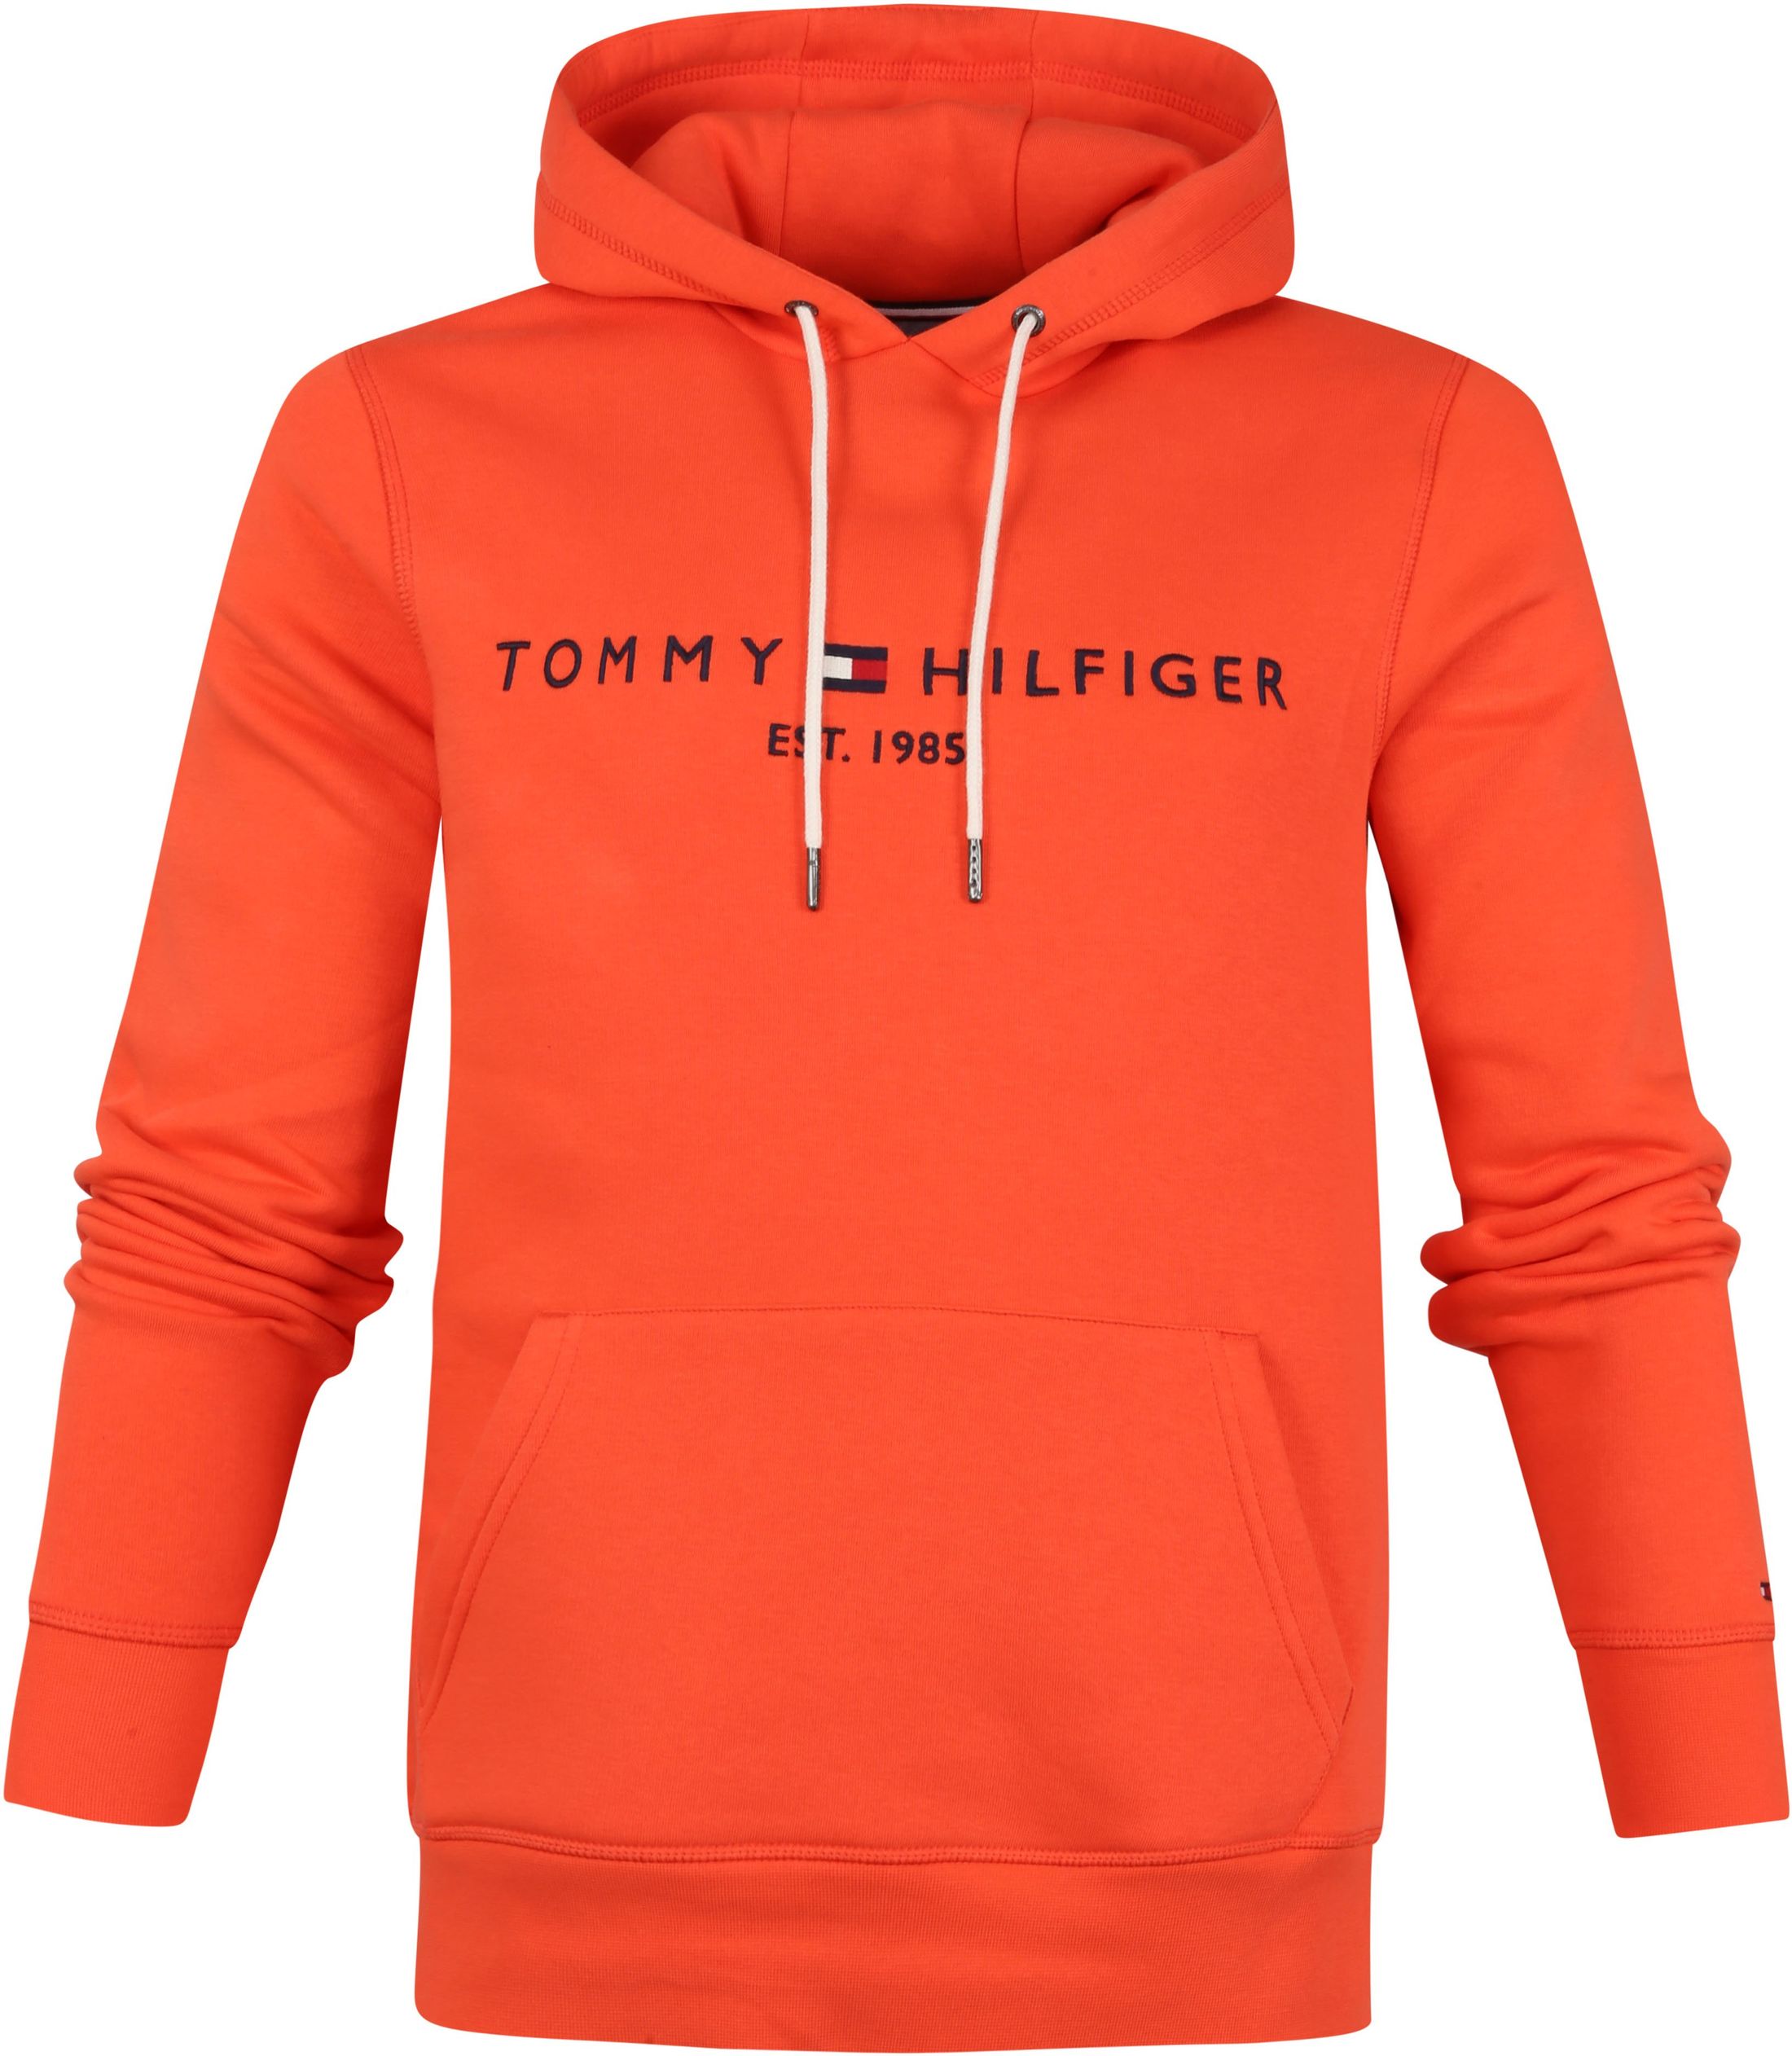 Tommy Hilfiger Hoodie Orange size L